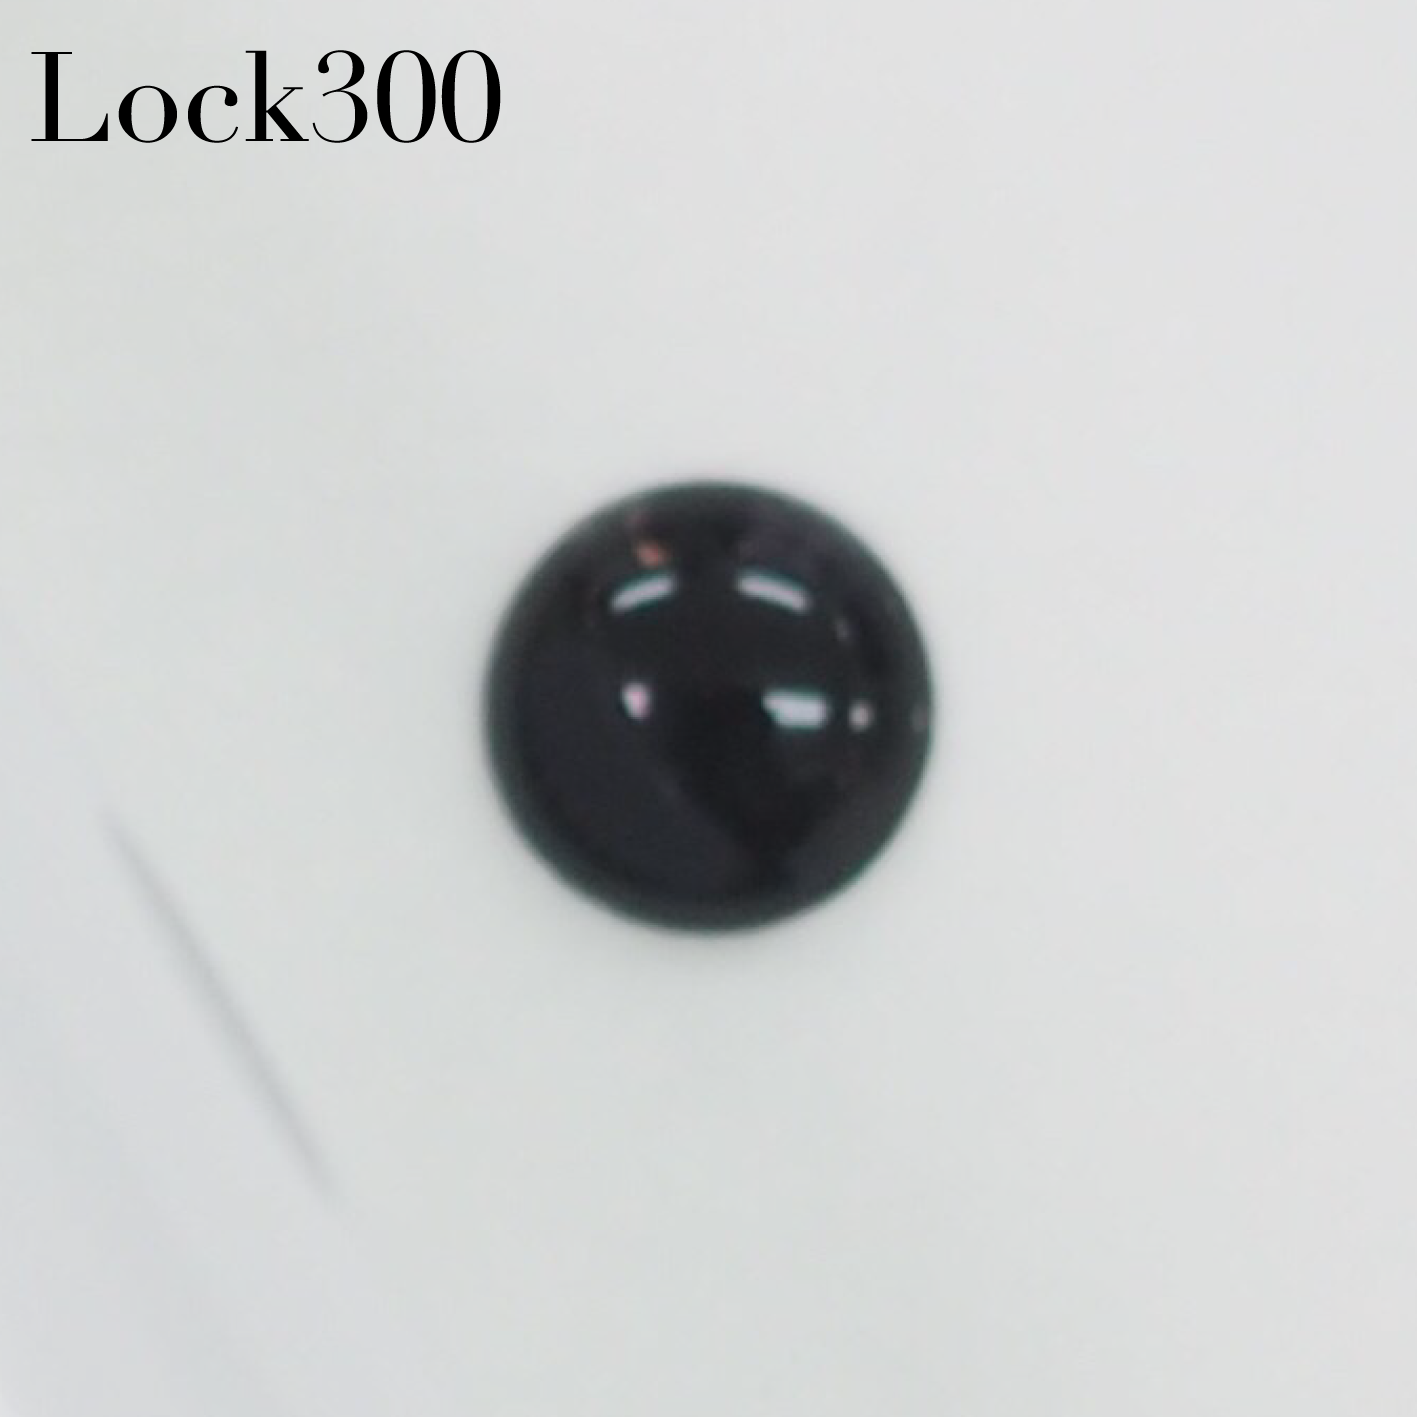 Lock GLUE 300